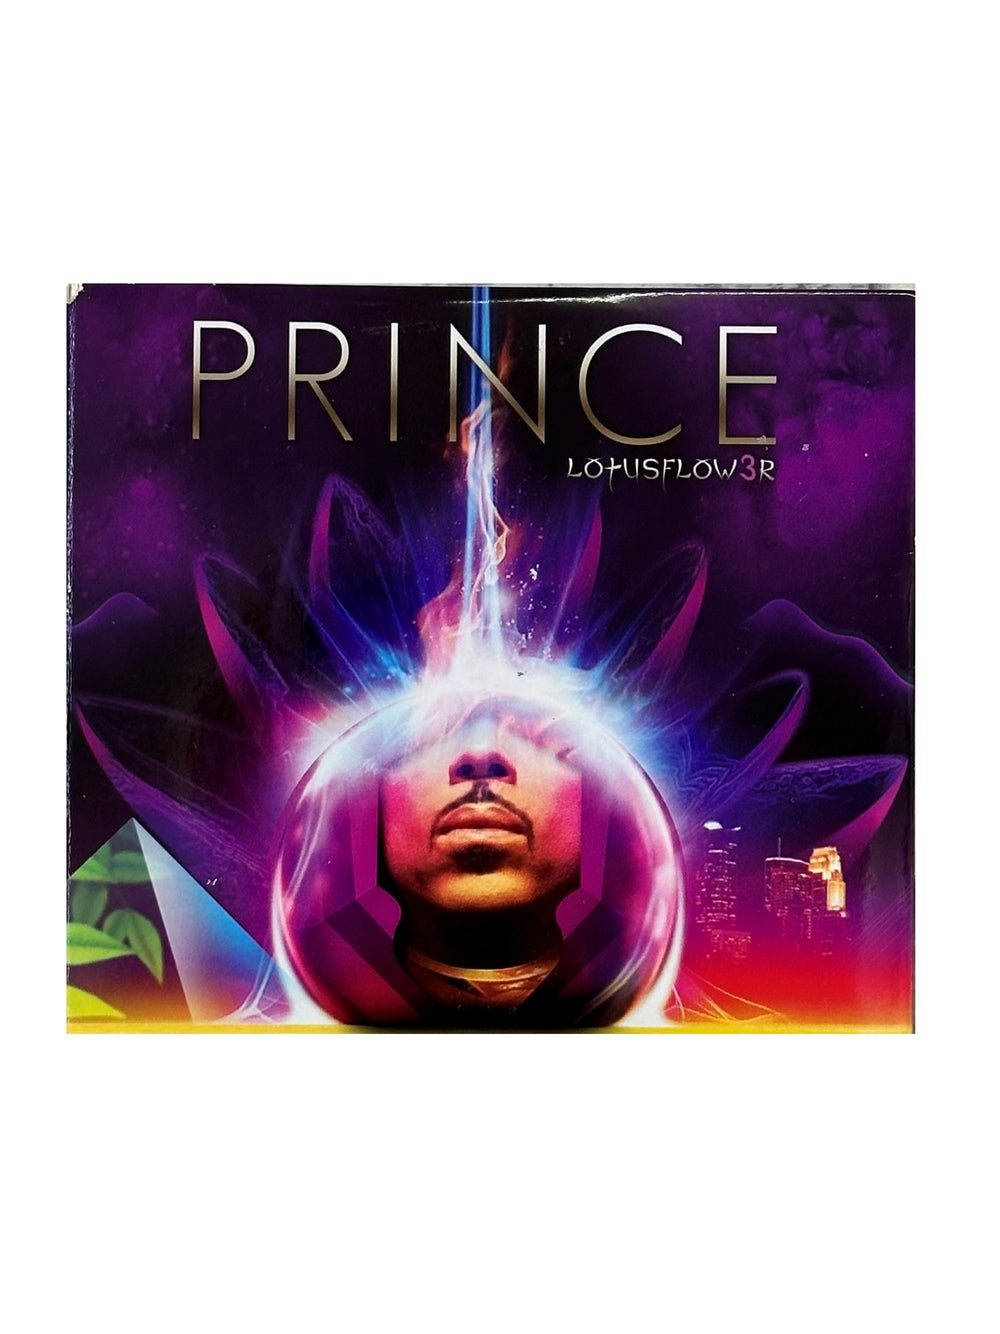 Prince – Bria Valente Lotusflow3r / MPLSound / Elixer CD Album X 3 Ltd Ed FR Preloved: 2009